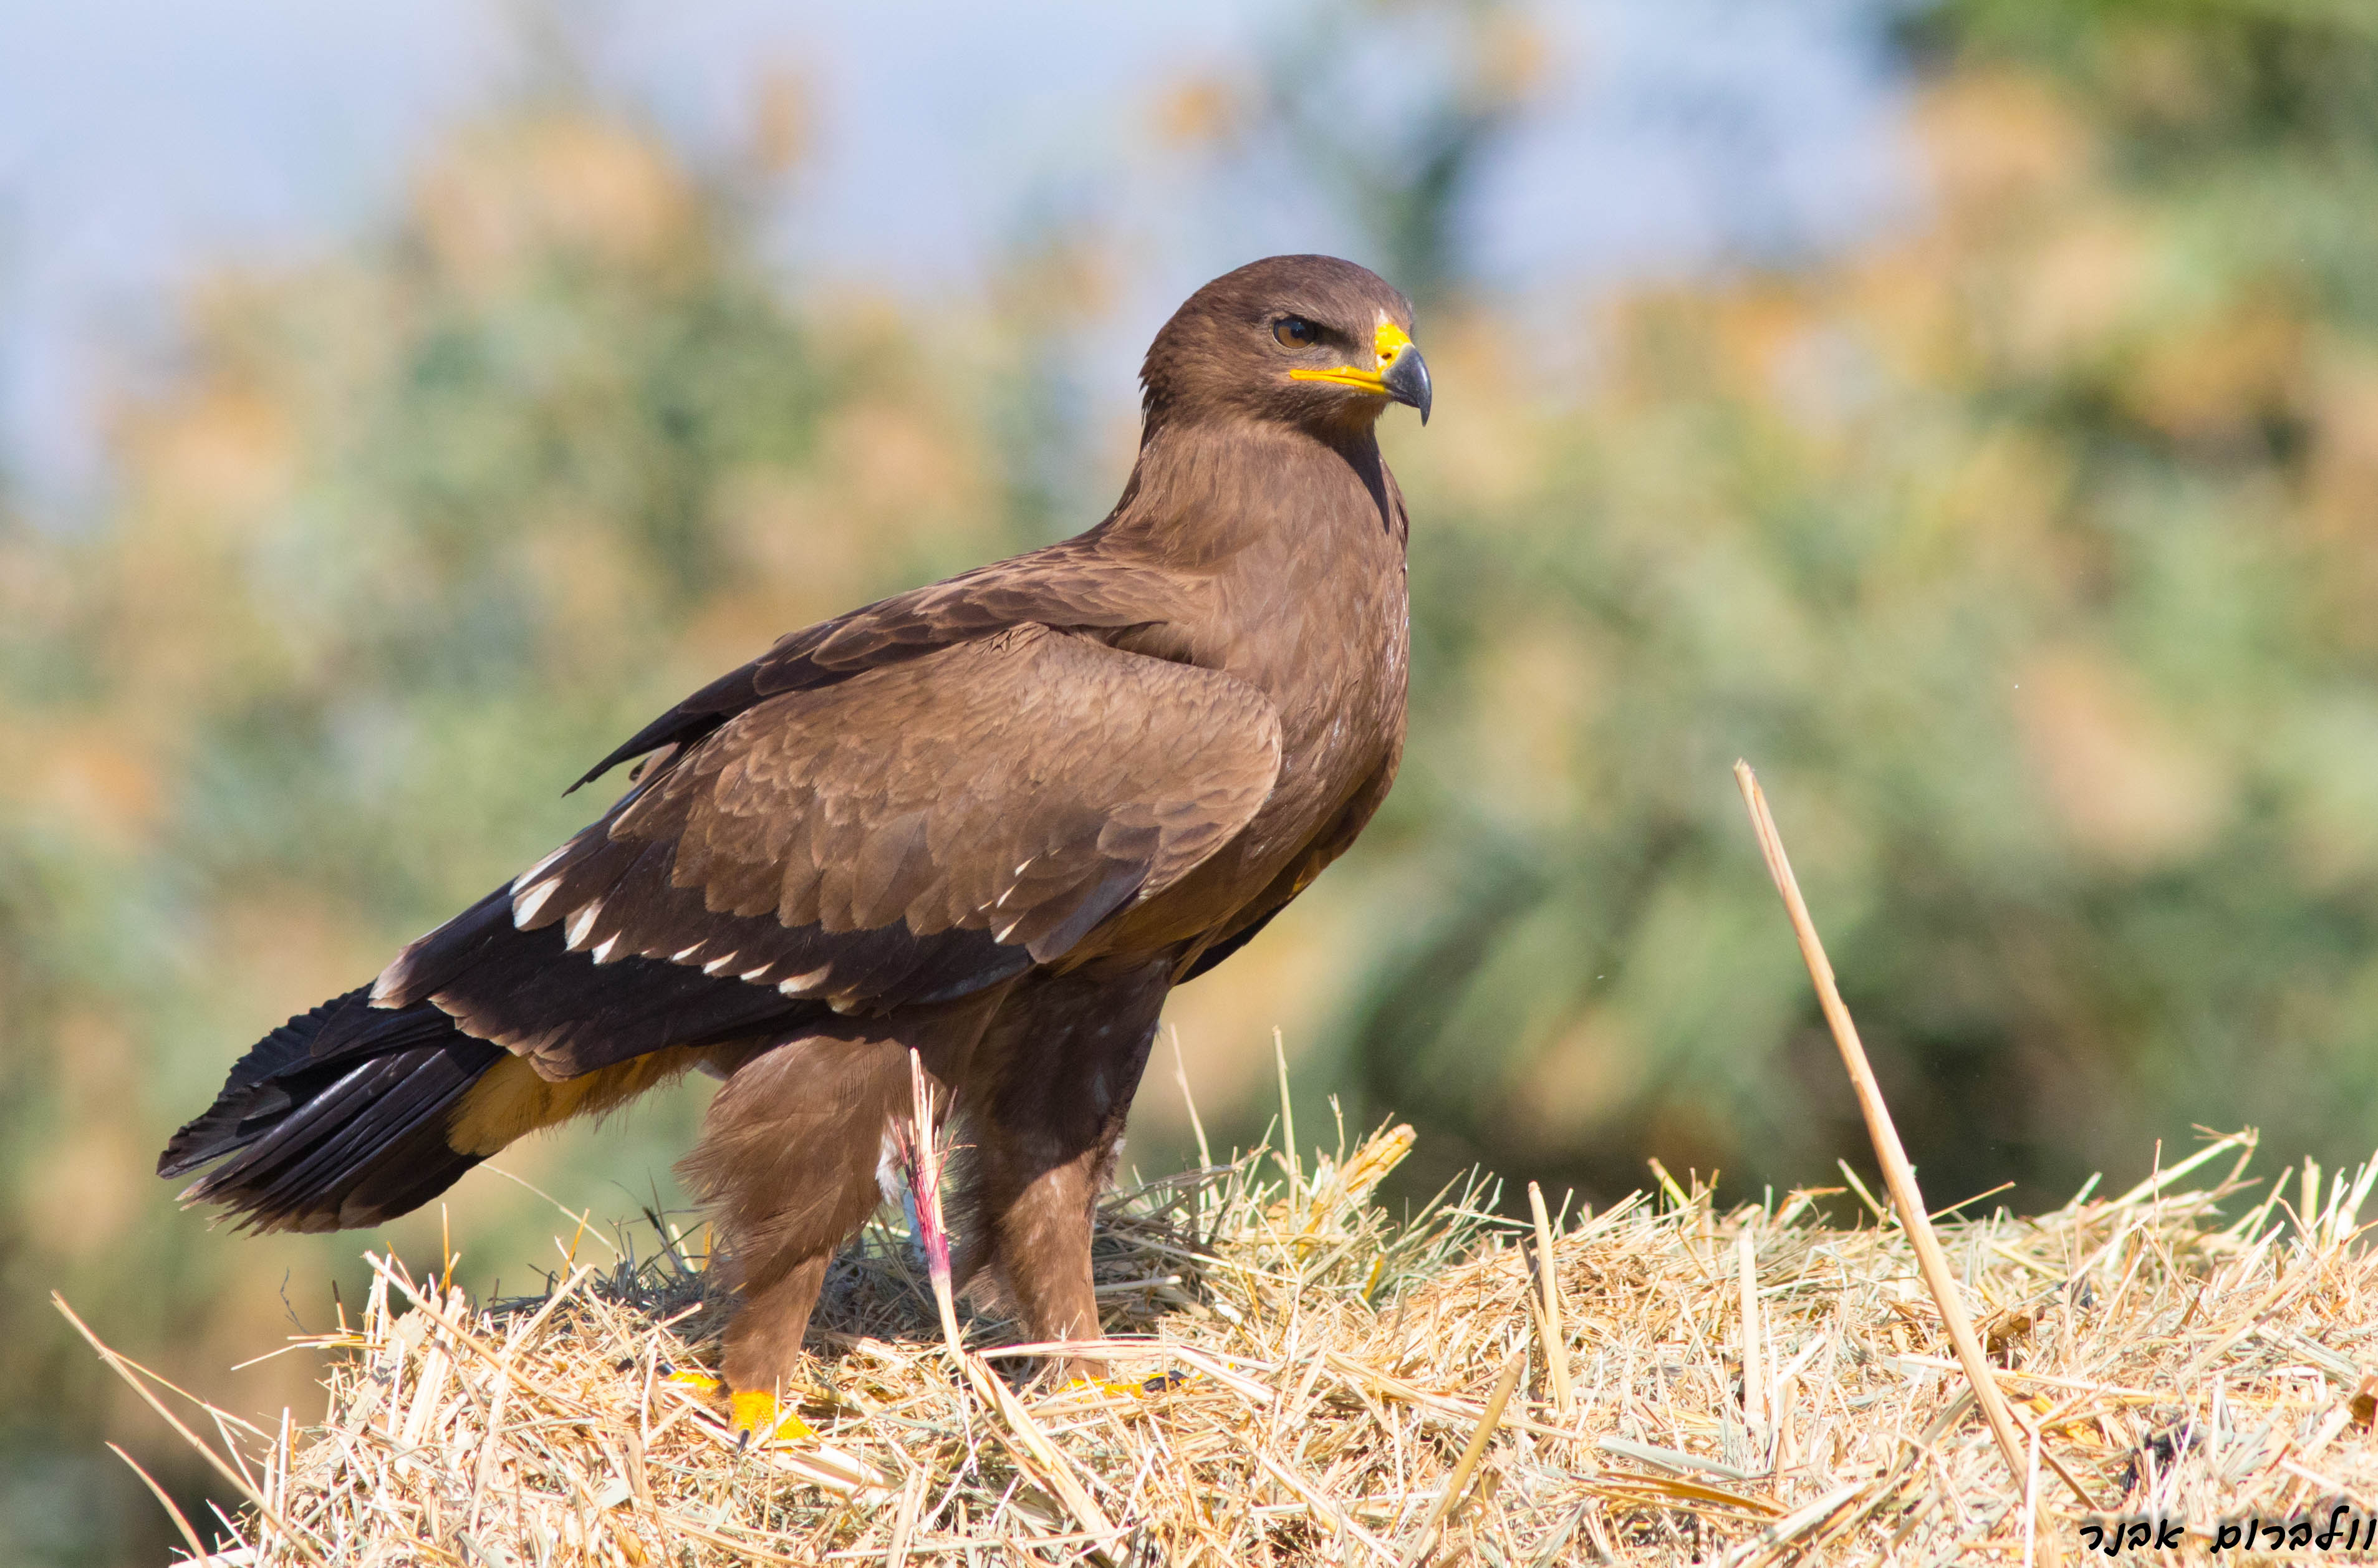 Lesser spotted eagle - Wikipedia